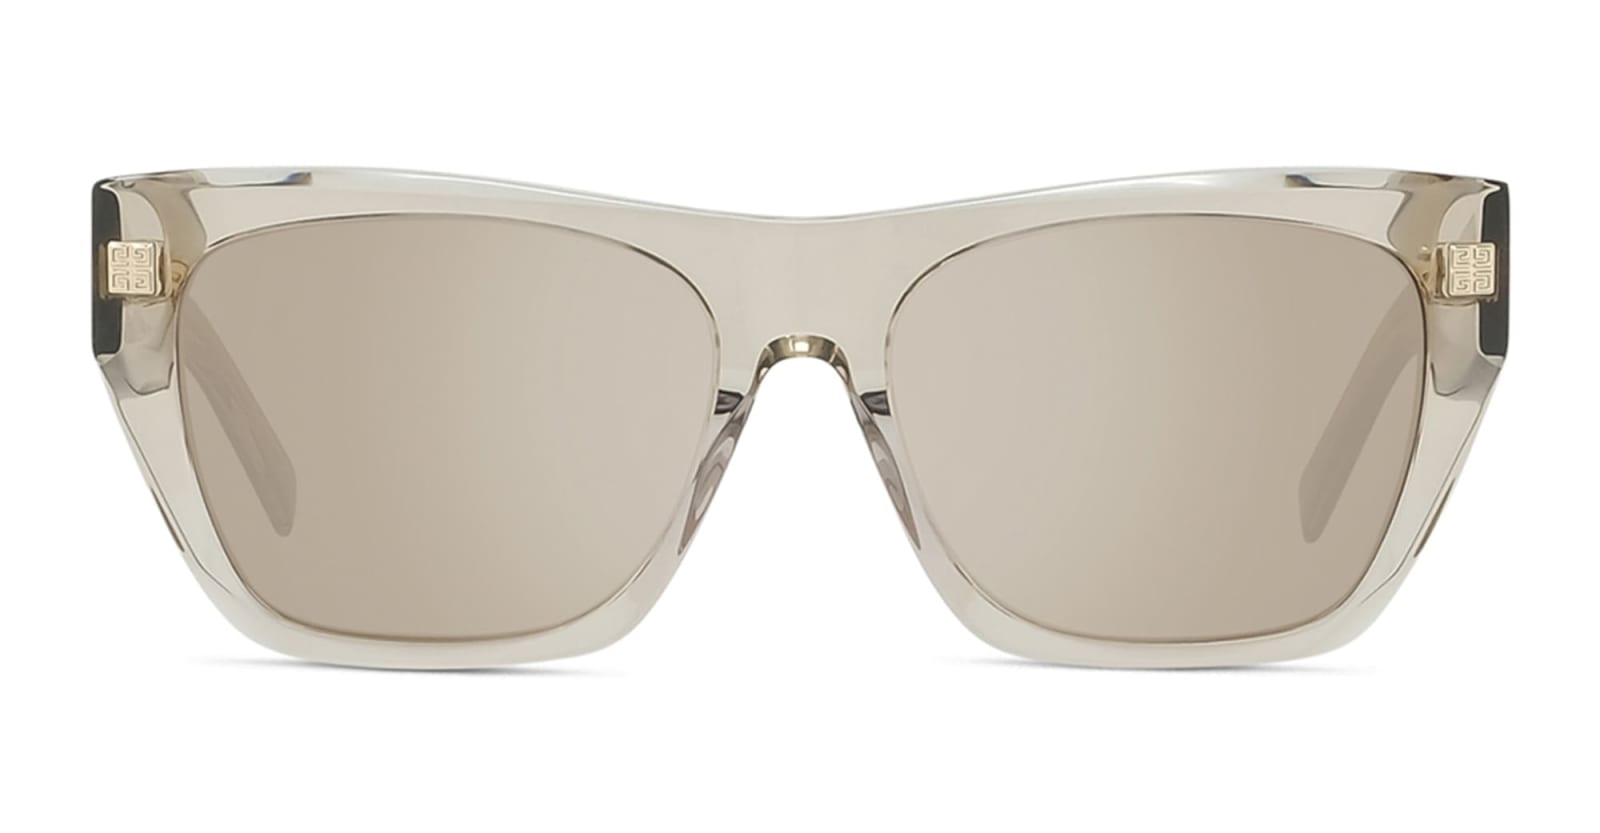 Gv40061u - Shiny Light Brow Sunglasses